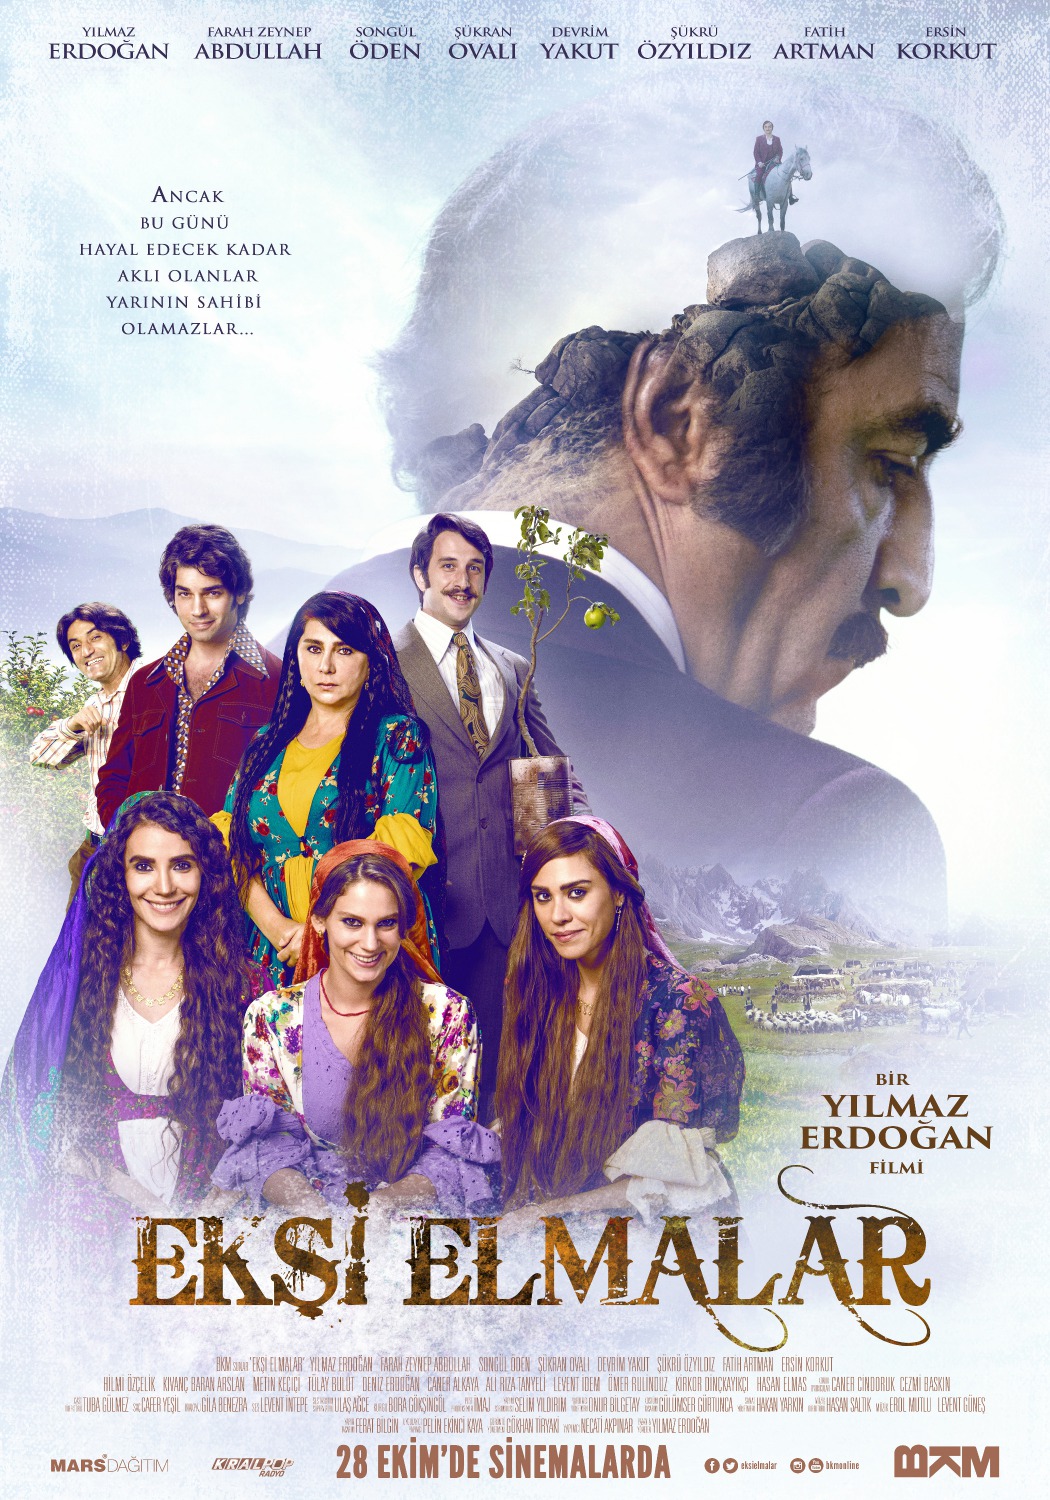 Extra Large Movie Poster Image for Eksi Elmalar 